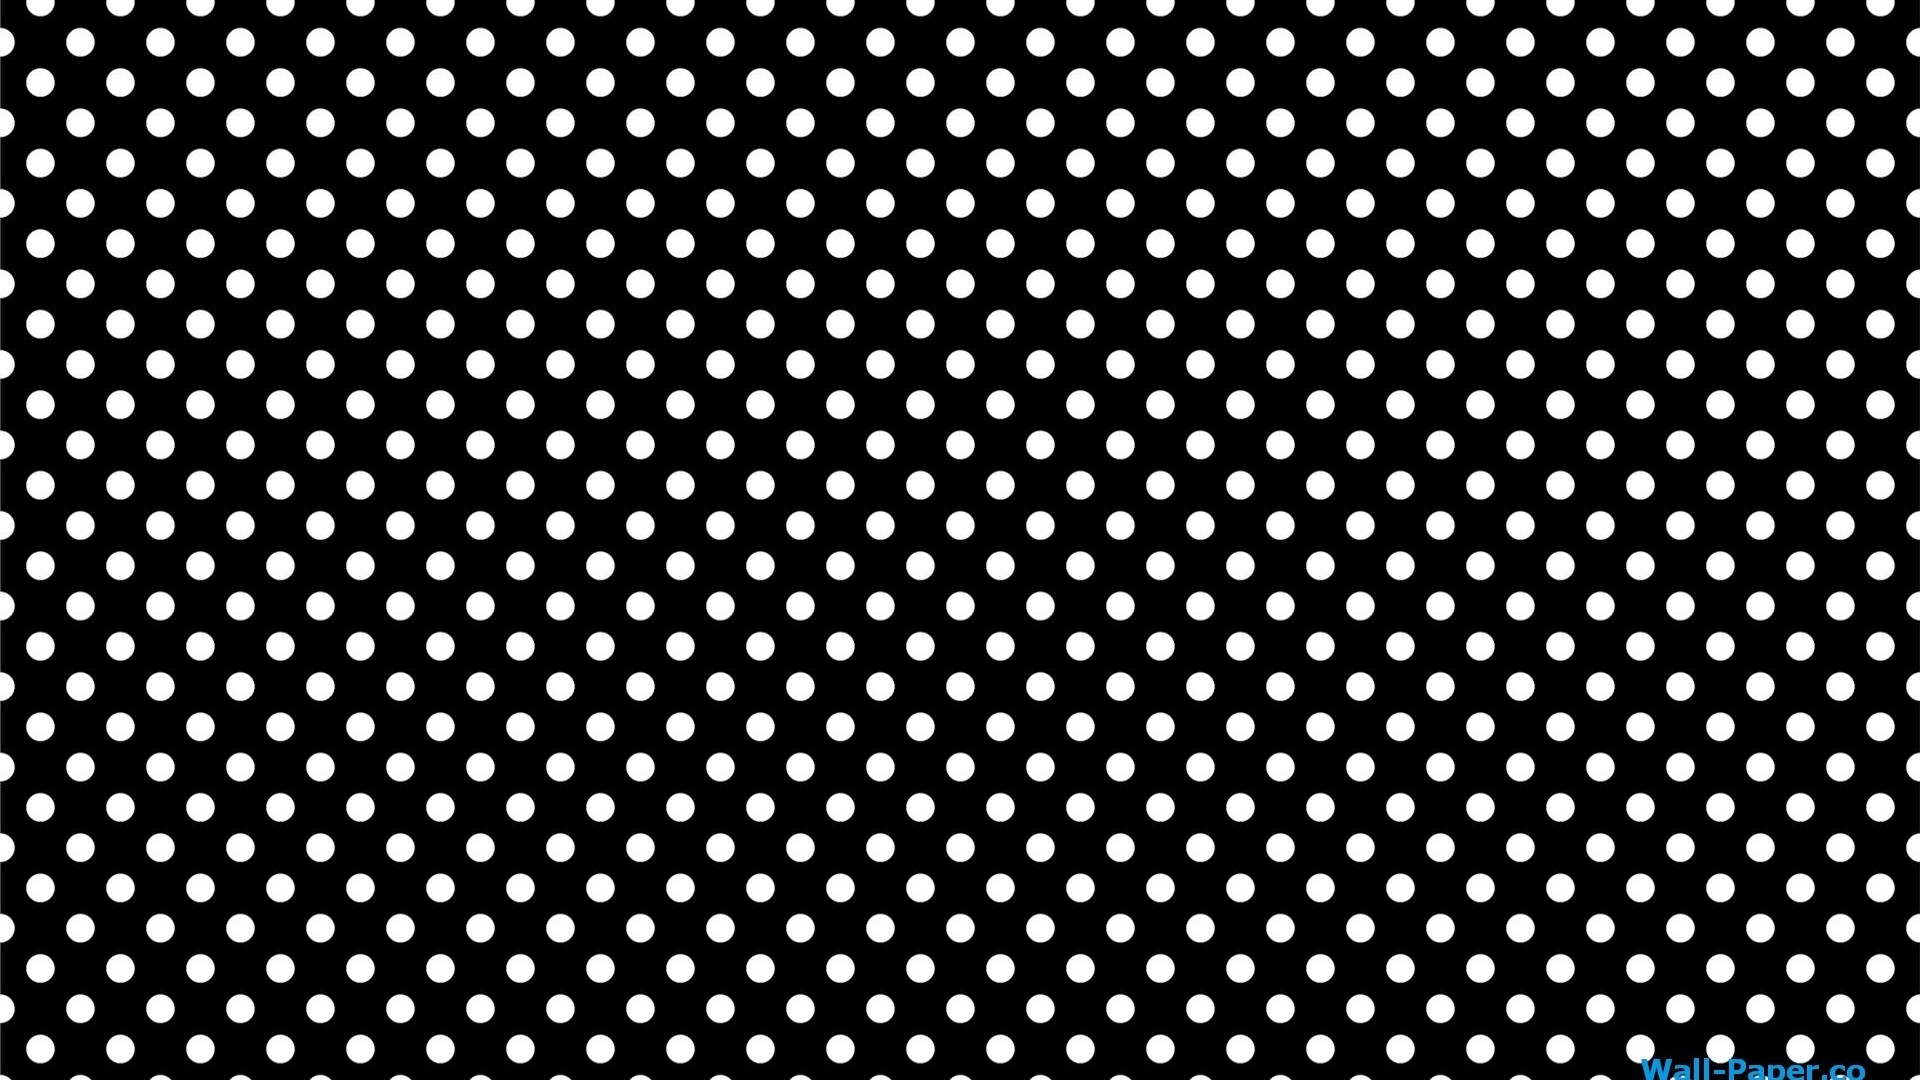 3. Black and White Polka Dot Nails - wide 2